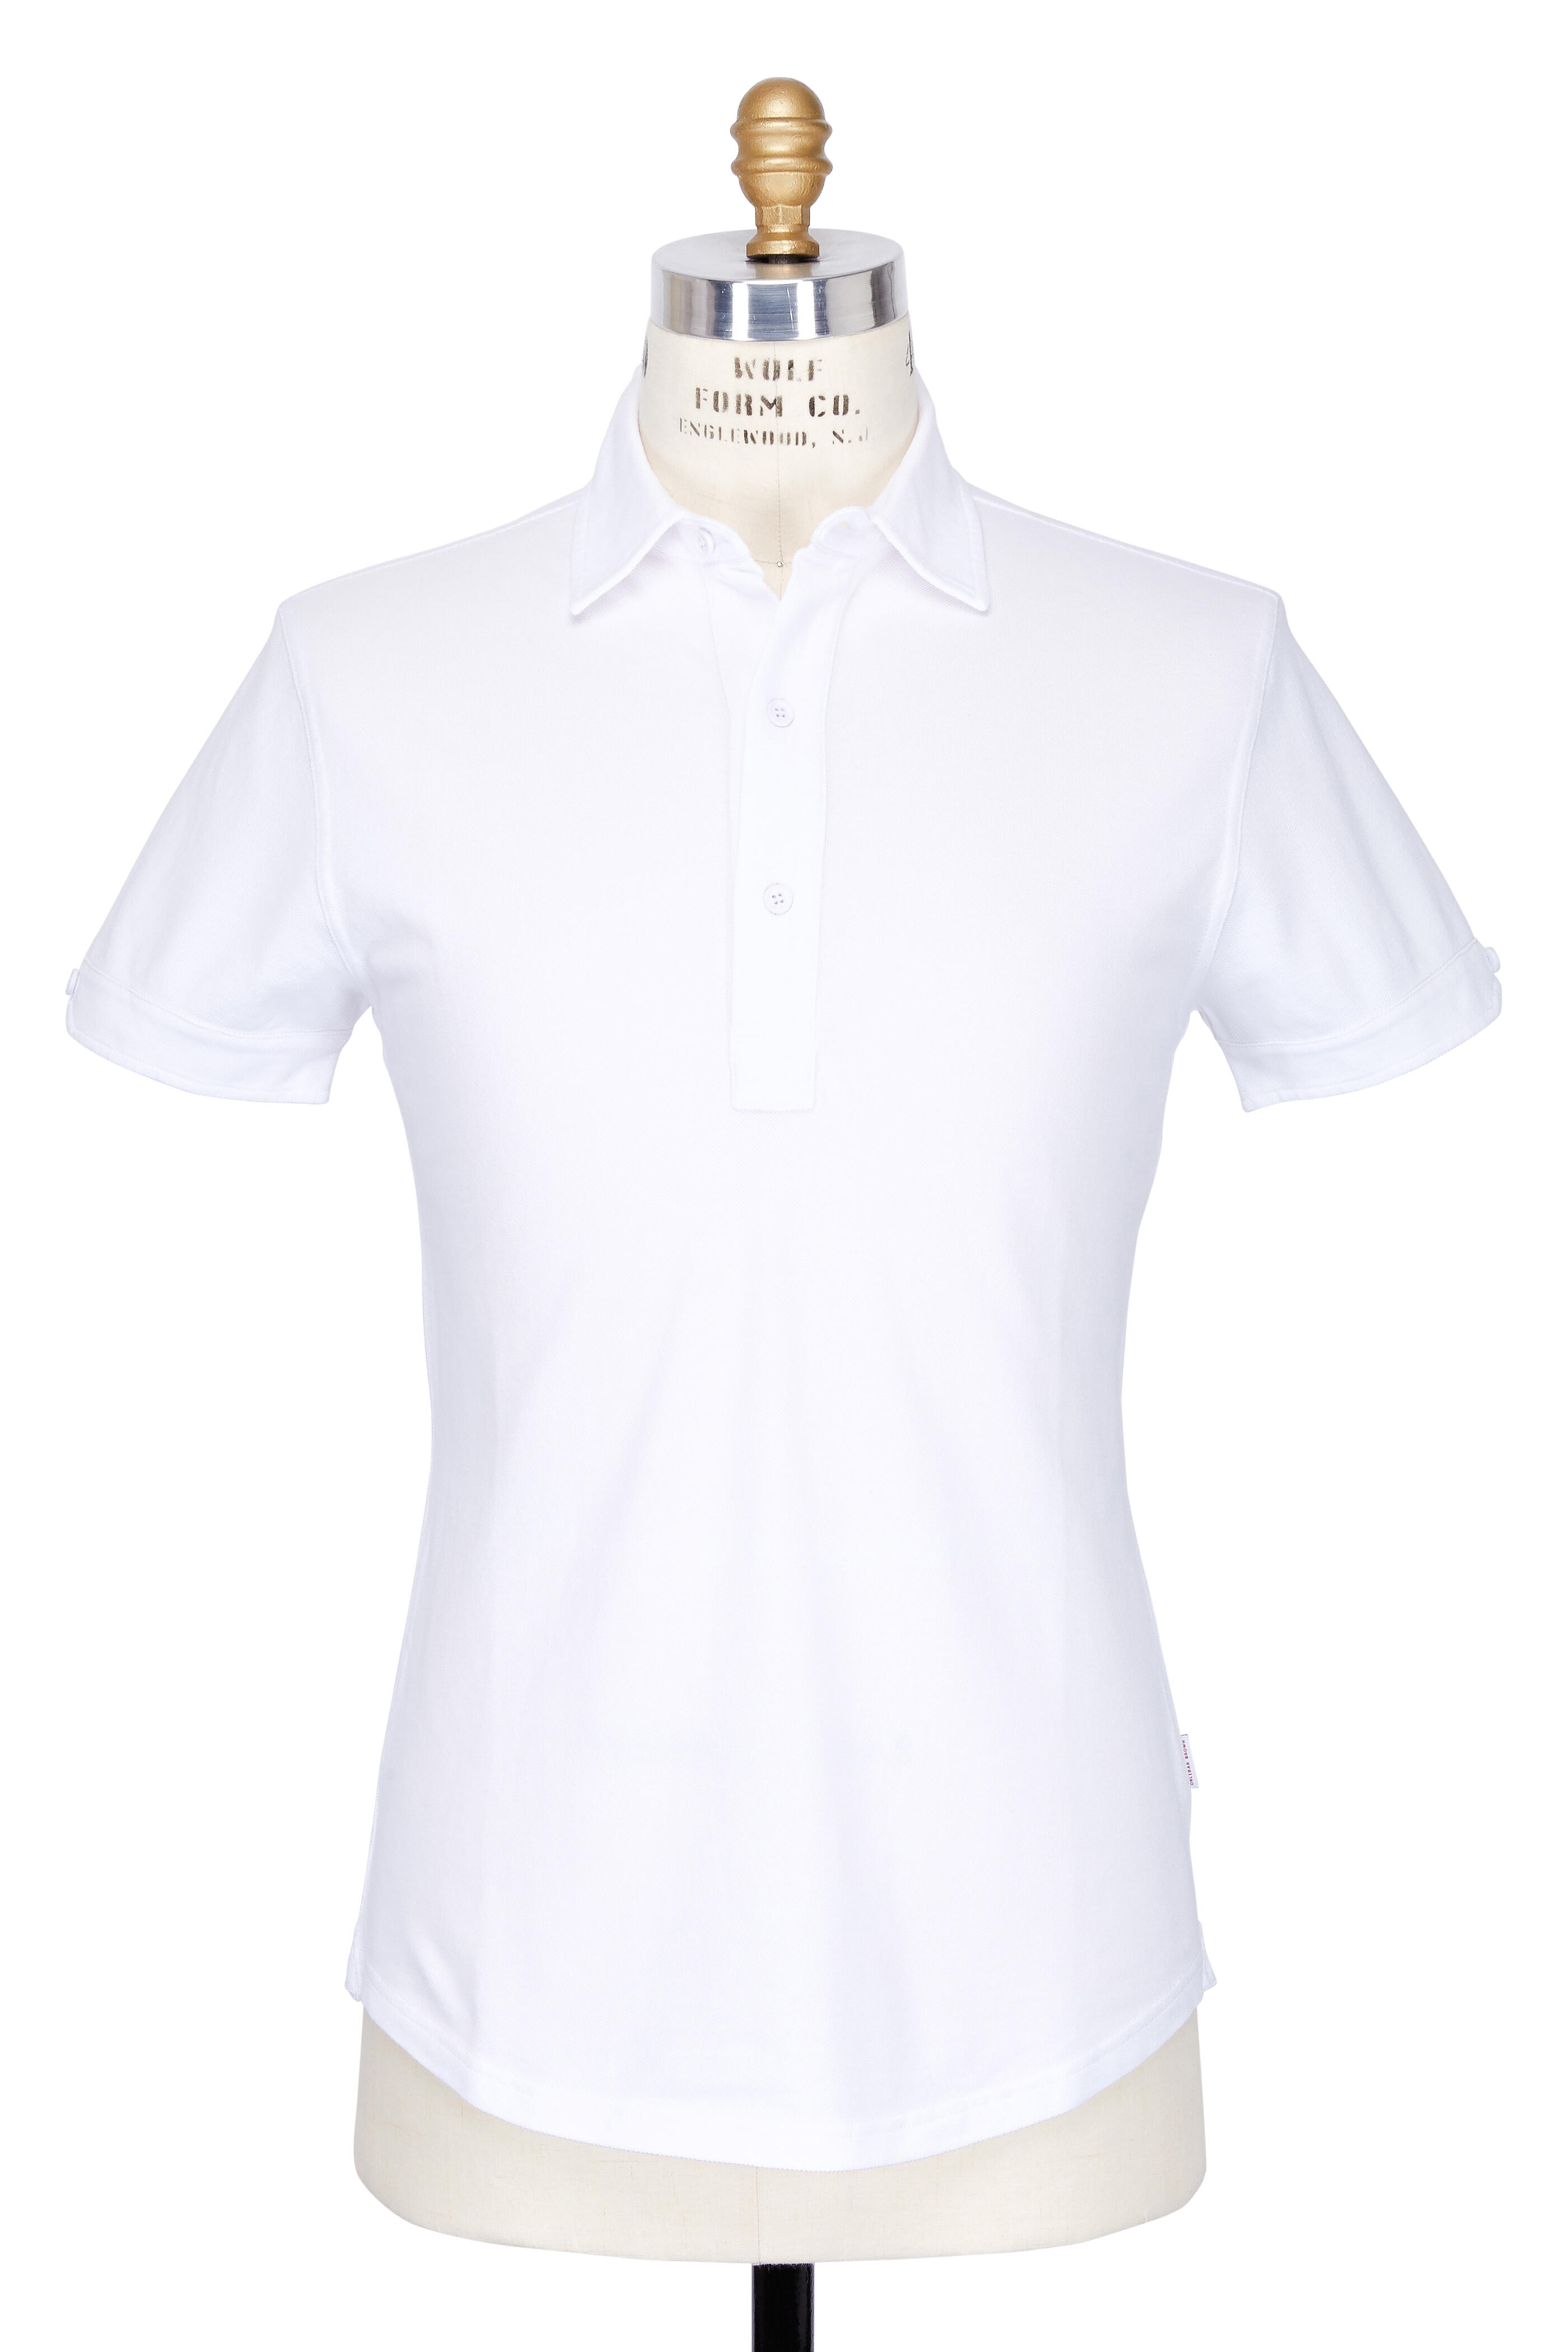 Sebastian Cotton Pique Polo Shirt in White - Orlebar Brown